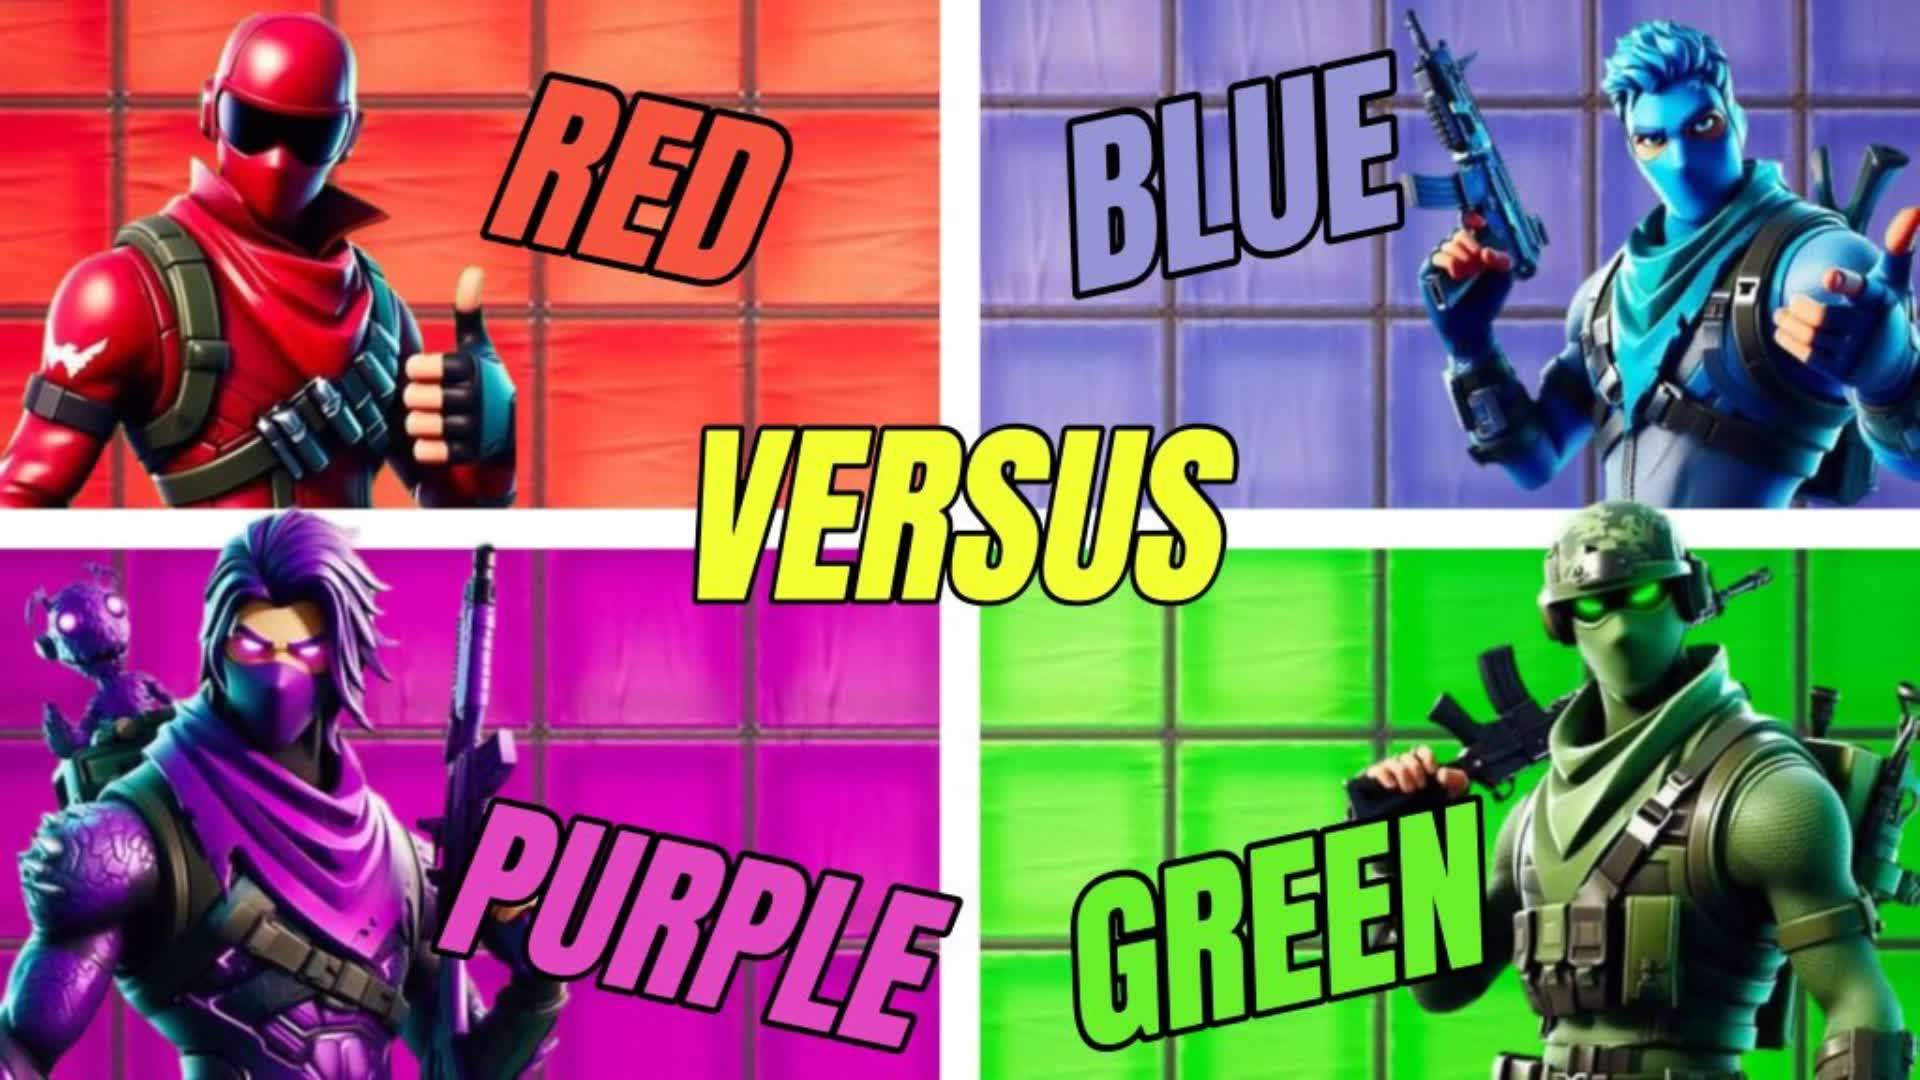 MEGA RED VS BLUE VS GREEN VS PURPLE